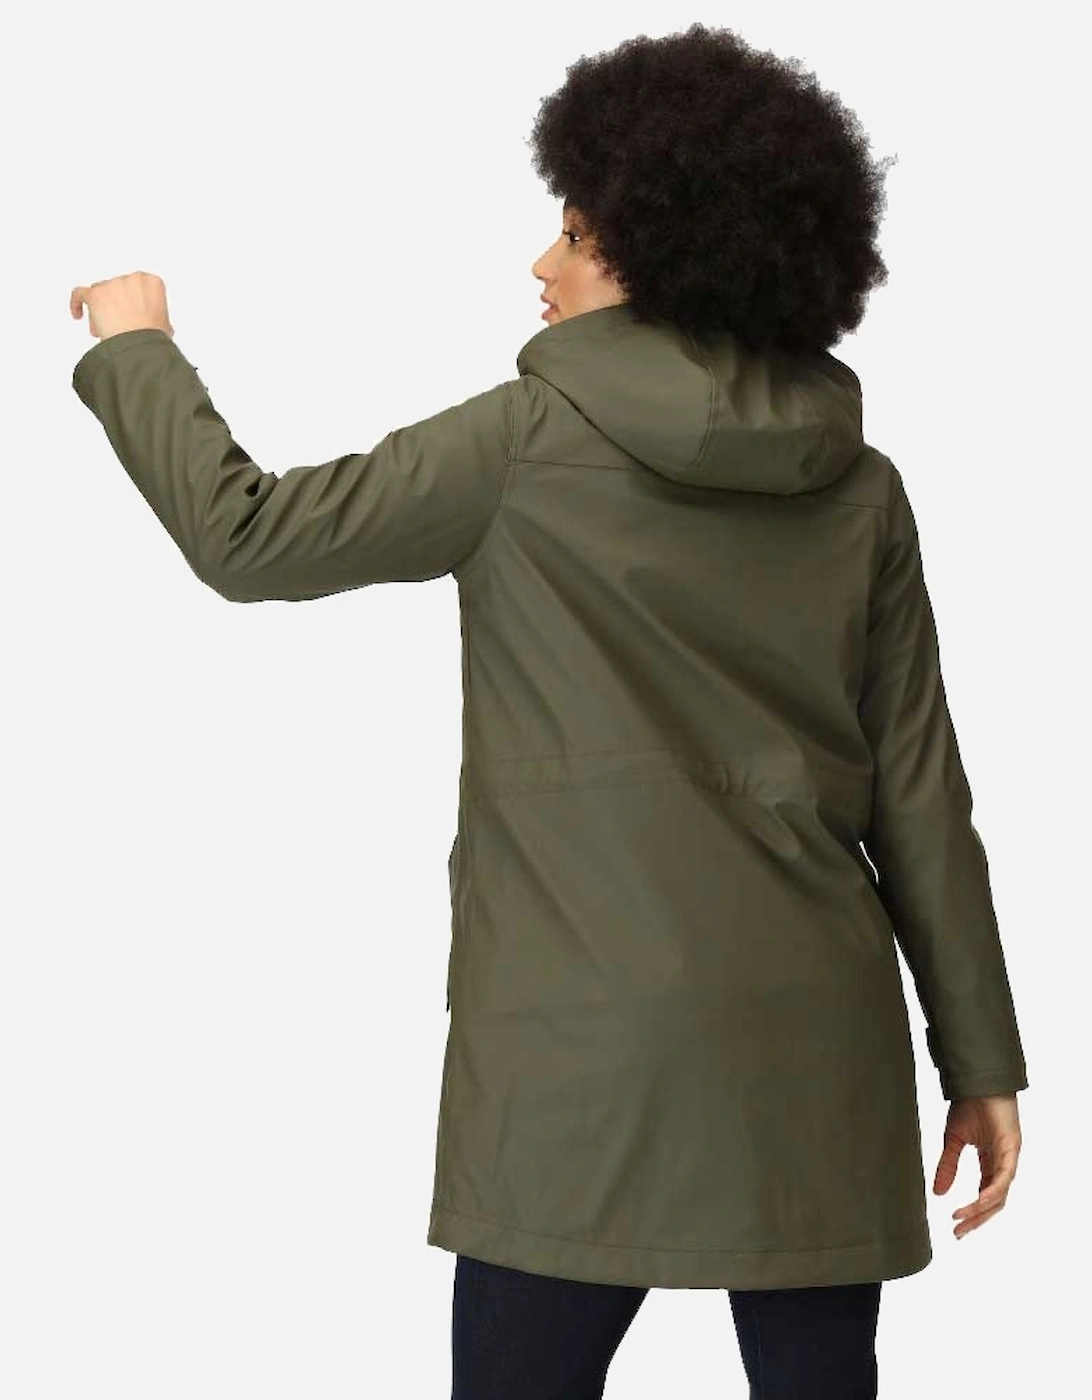 Womens Fantine Insulated Hooded Full Zip Jacket Coat